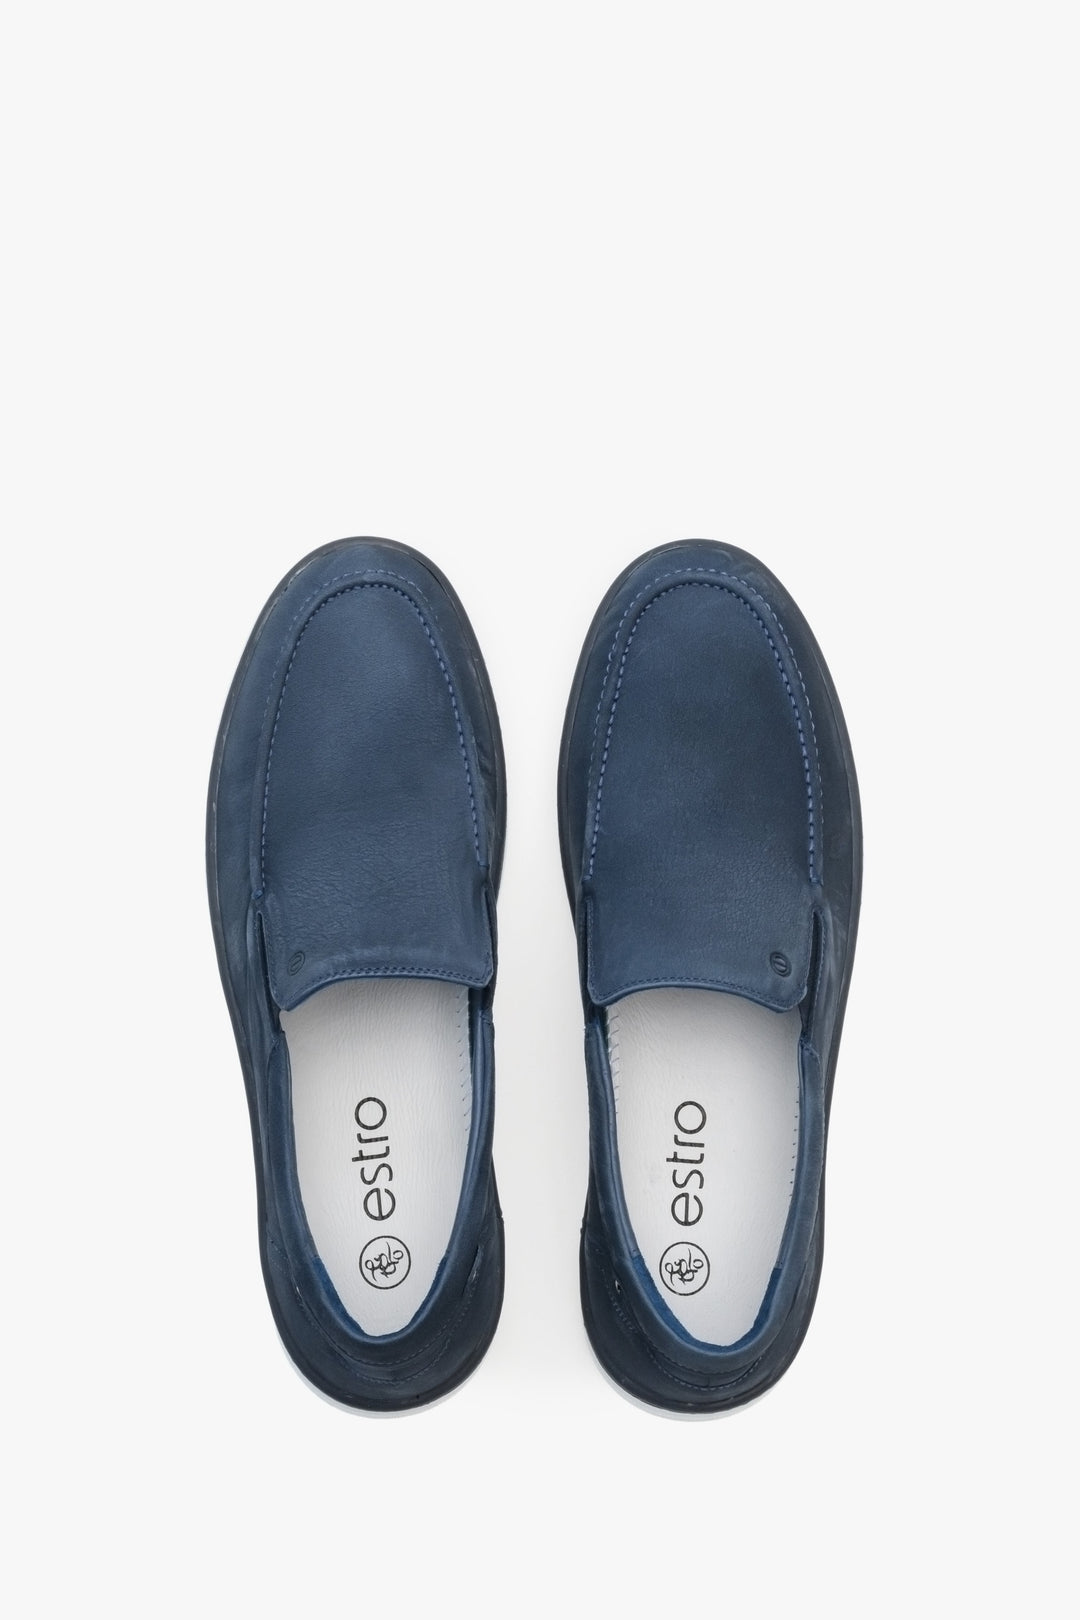 Blue men's Estro loafers for spring - footwear presentation from above.